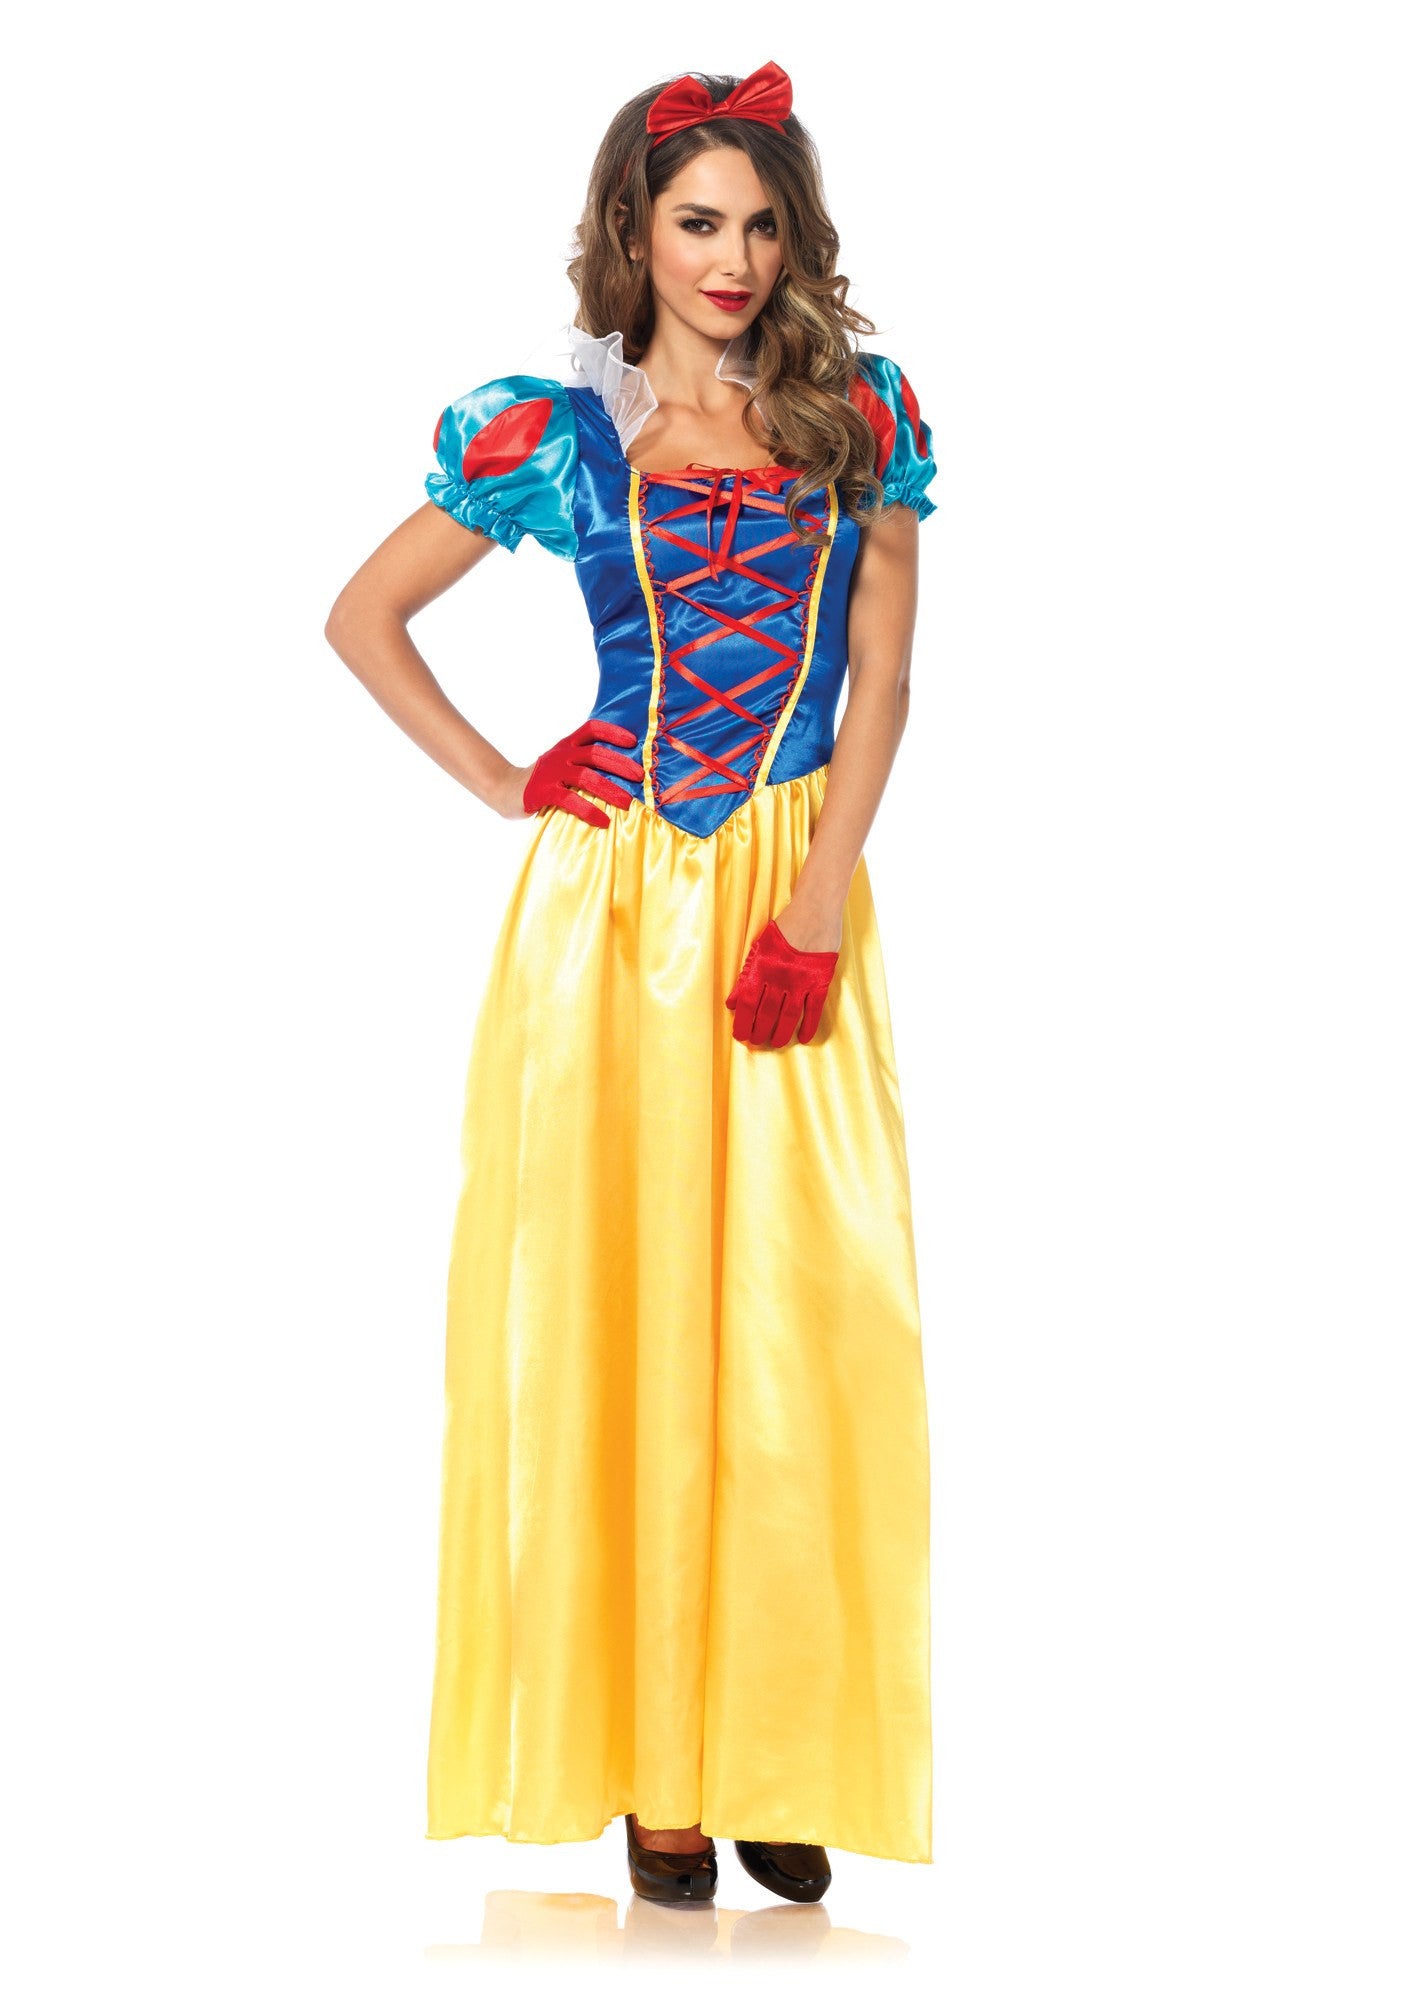 Costume - Snow White Classic